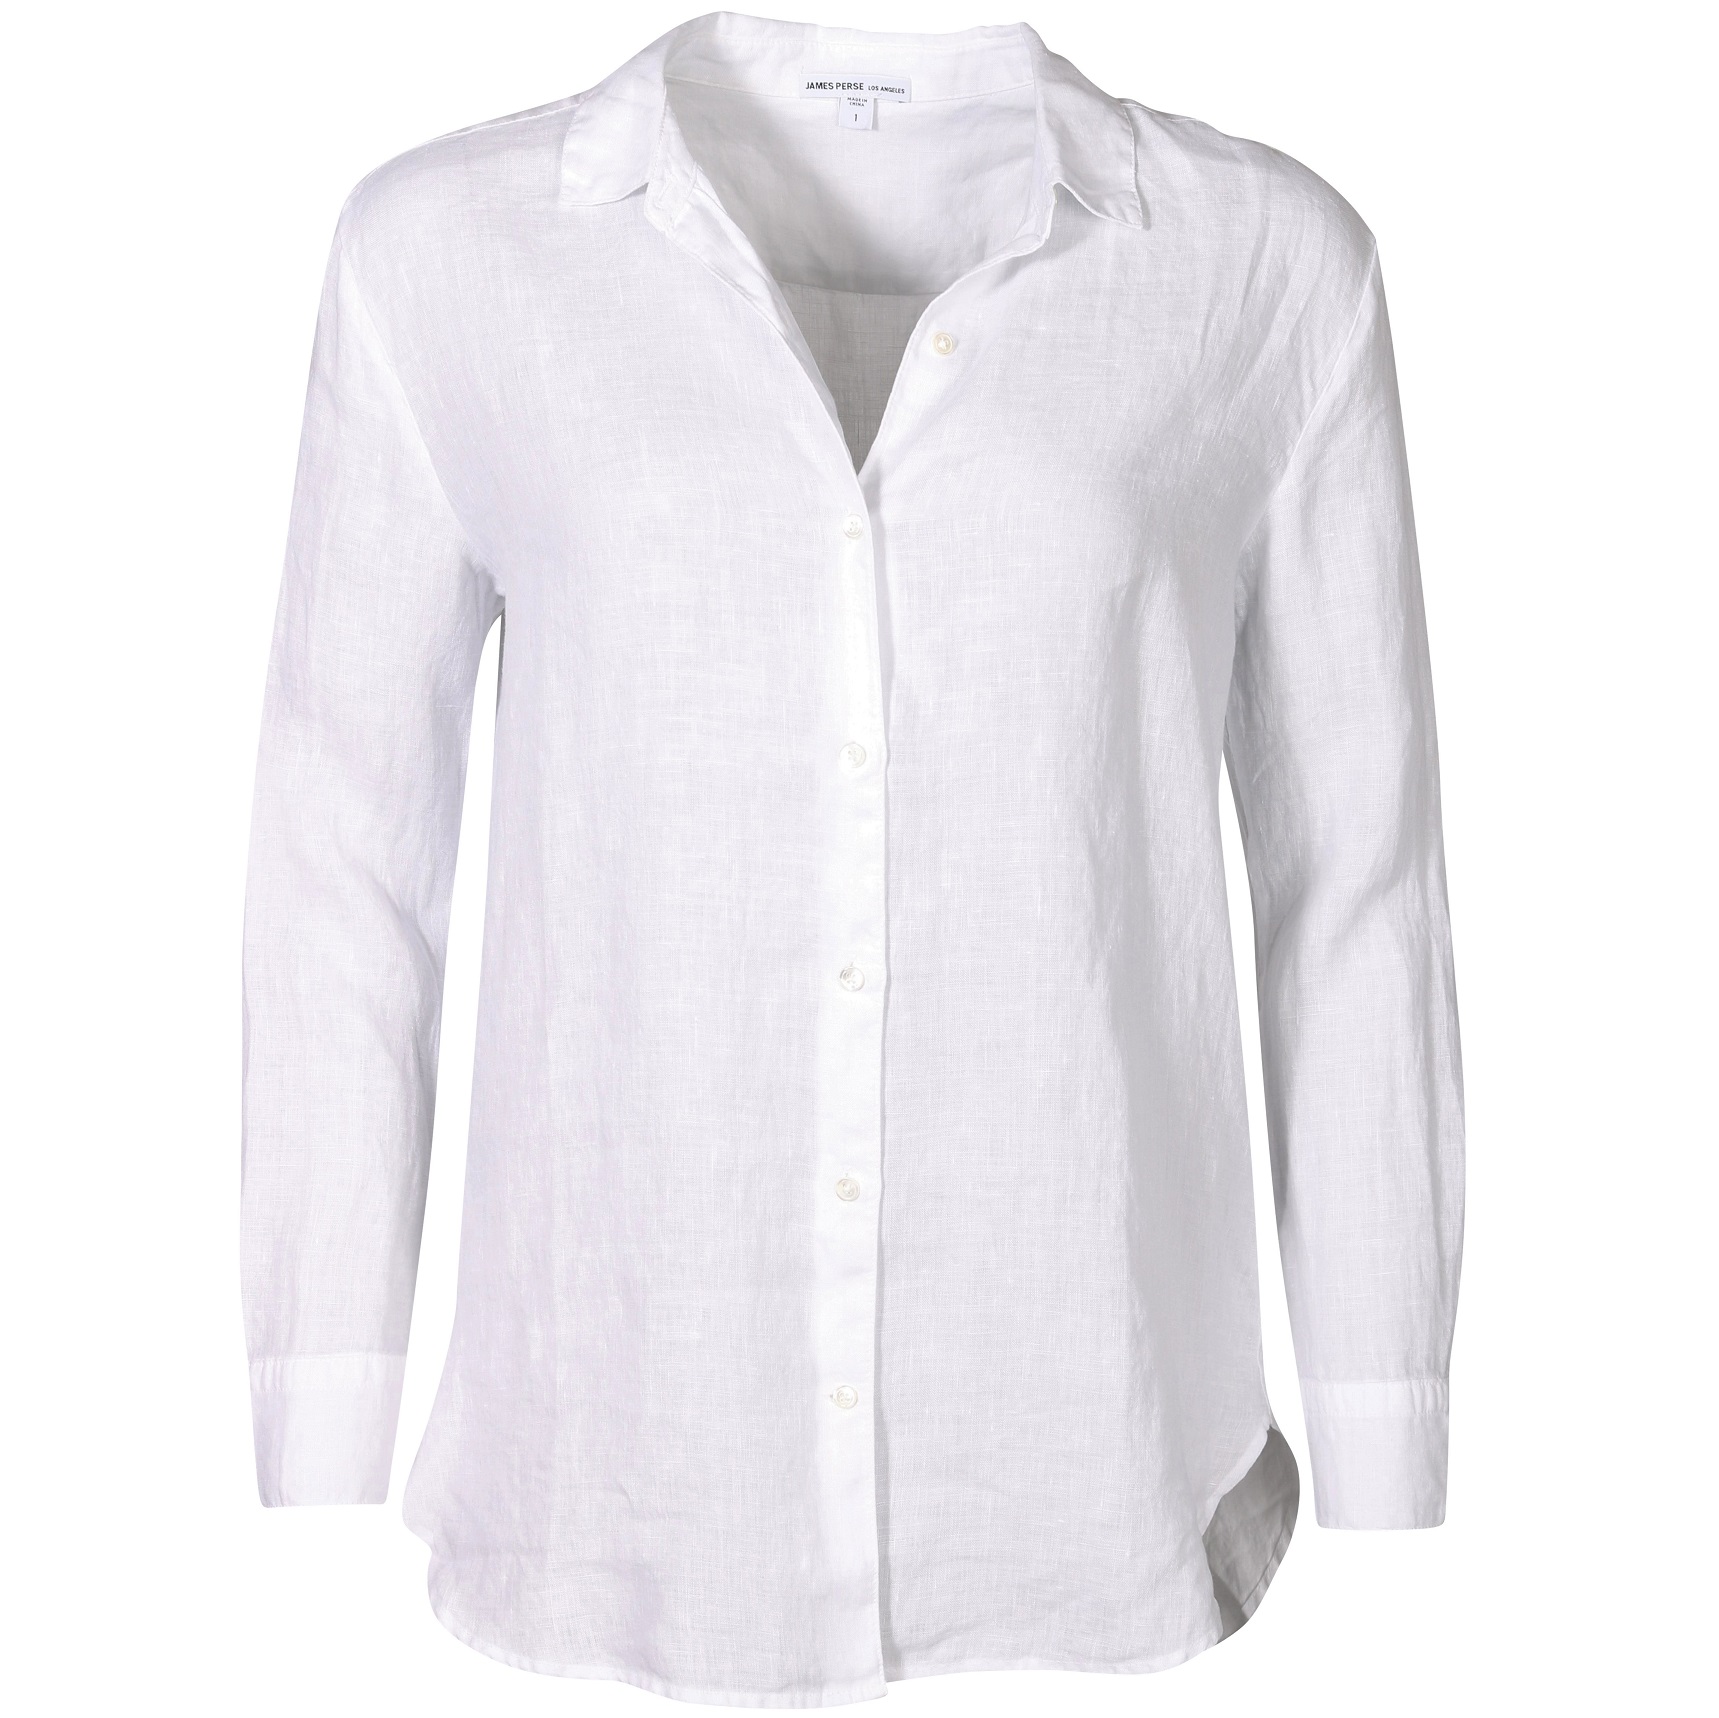 JAMES PERSE Light Weight Linen Shirt in White 0/XS